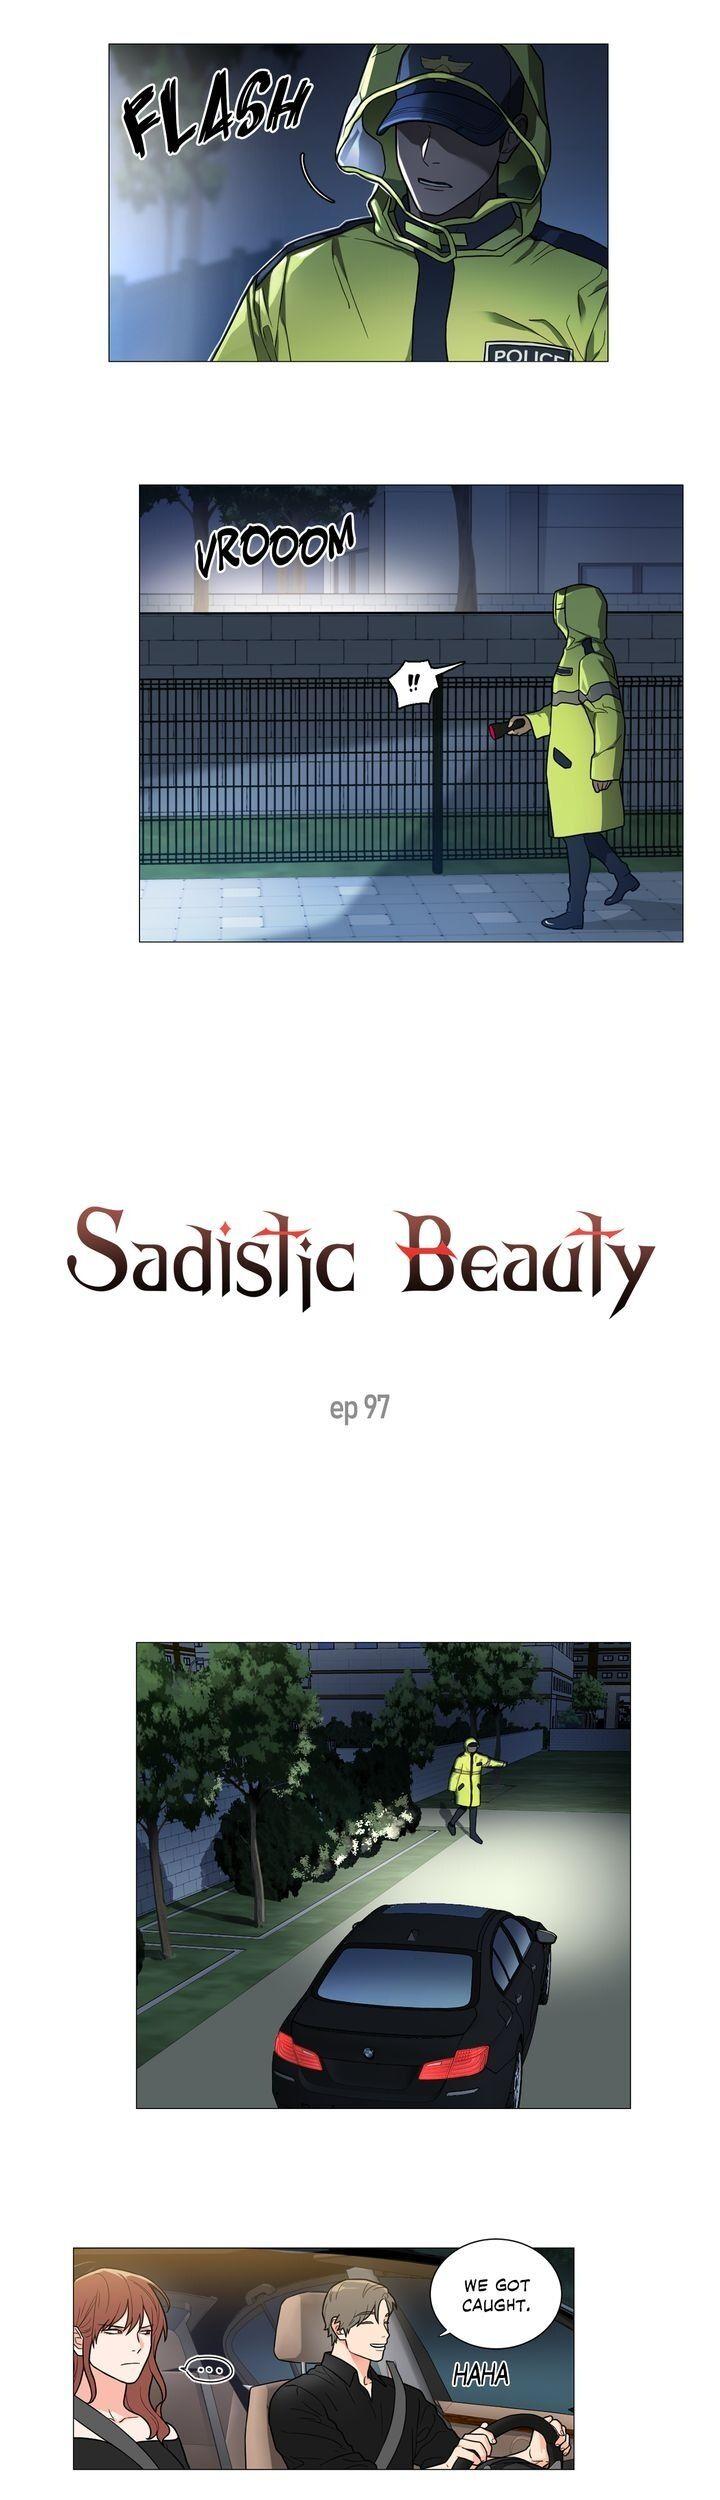 Sadistic Beauty - Chapter 97 Page 2